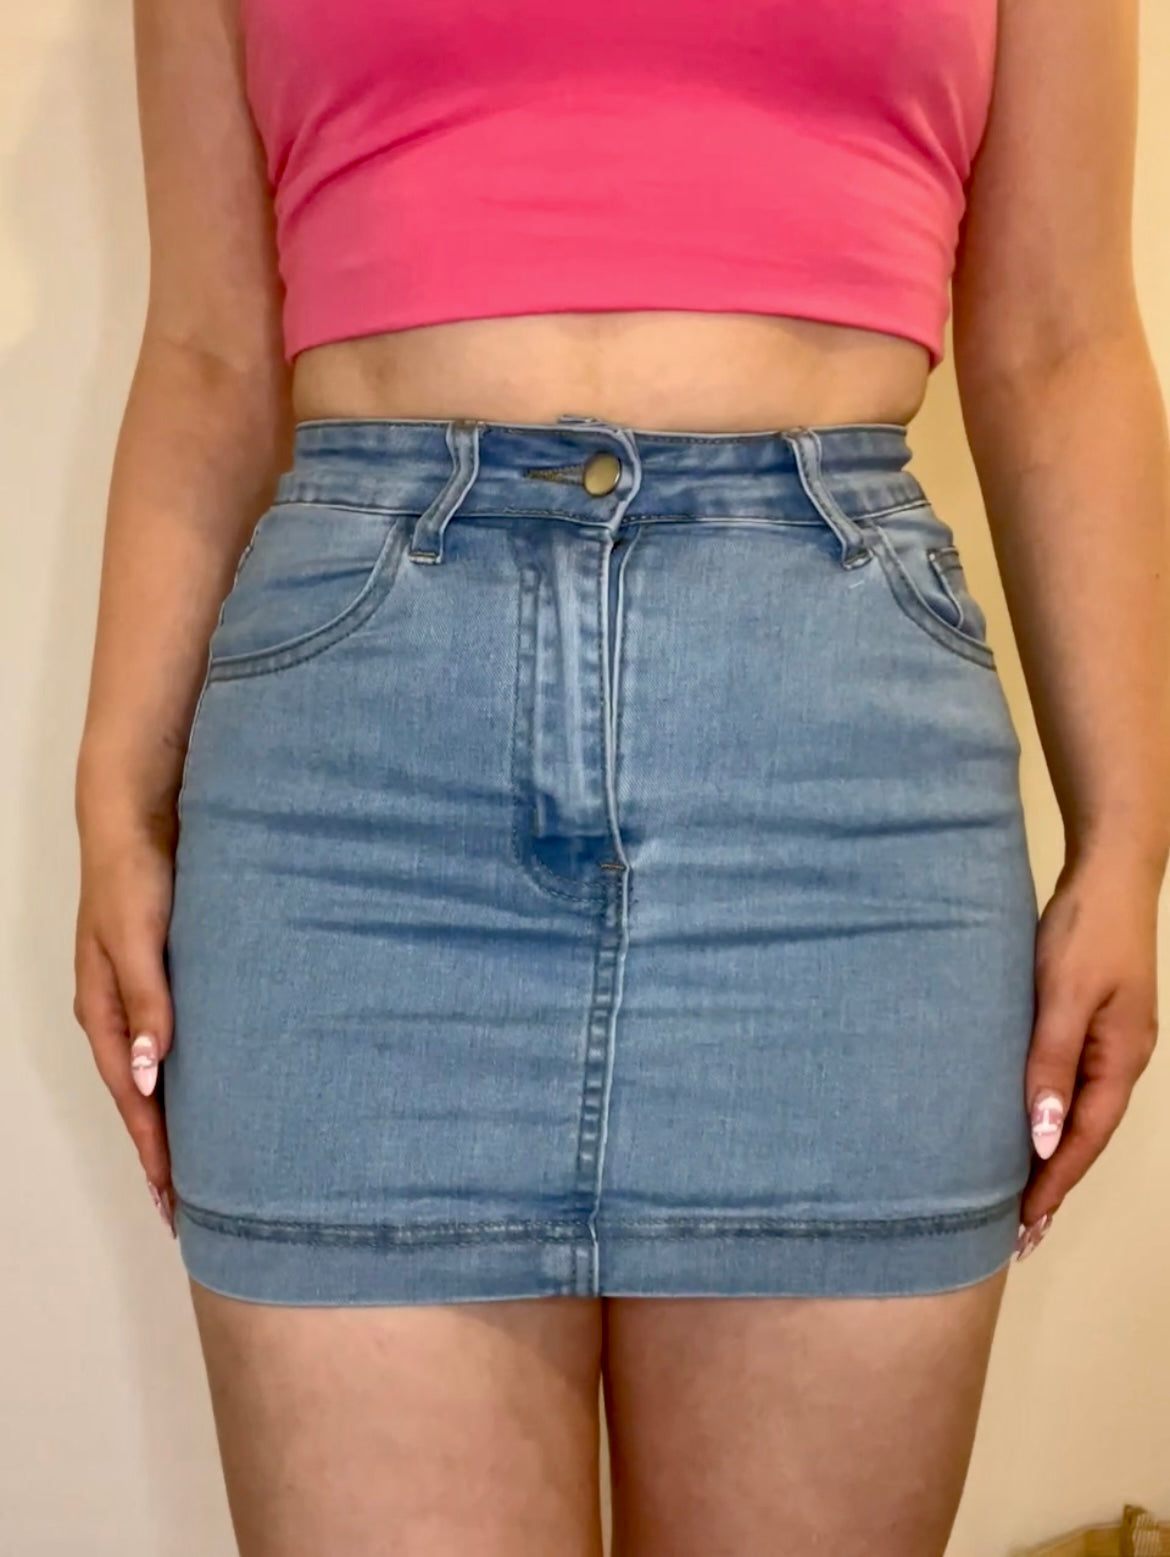 Discover more than 247 bodycon denim skirt super hot